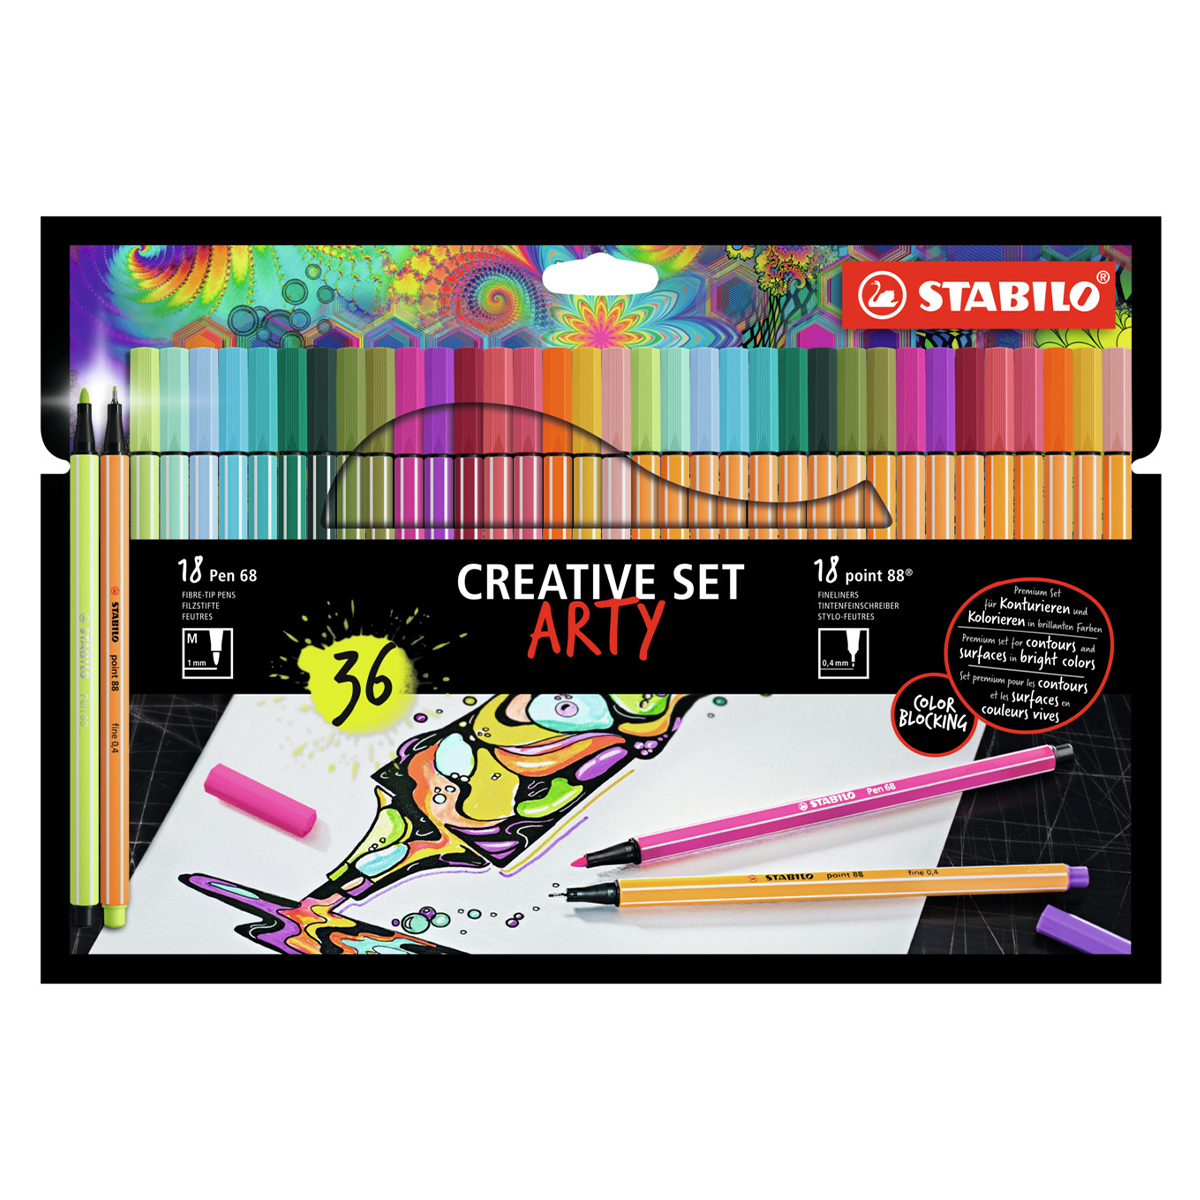 Creative Set Arty 36 pcs in the group Pens / Artist Pens / Felt Tip Pens at Pen Store (127818)